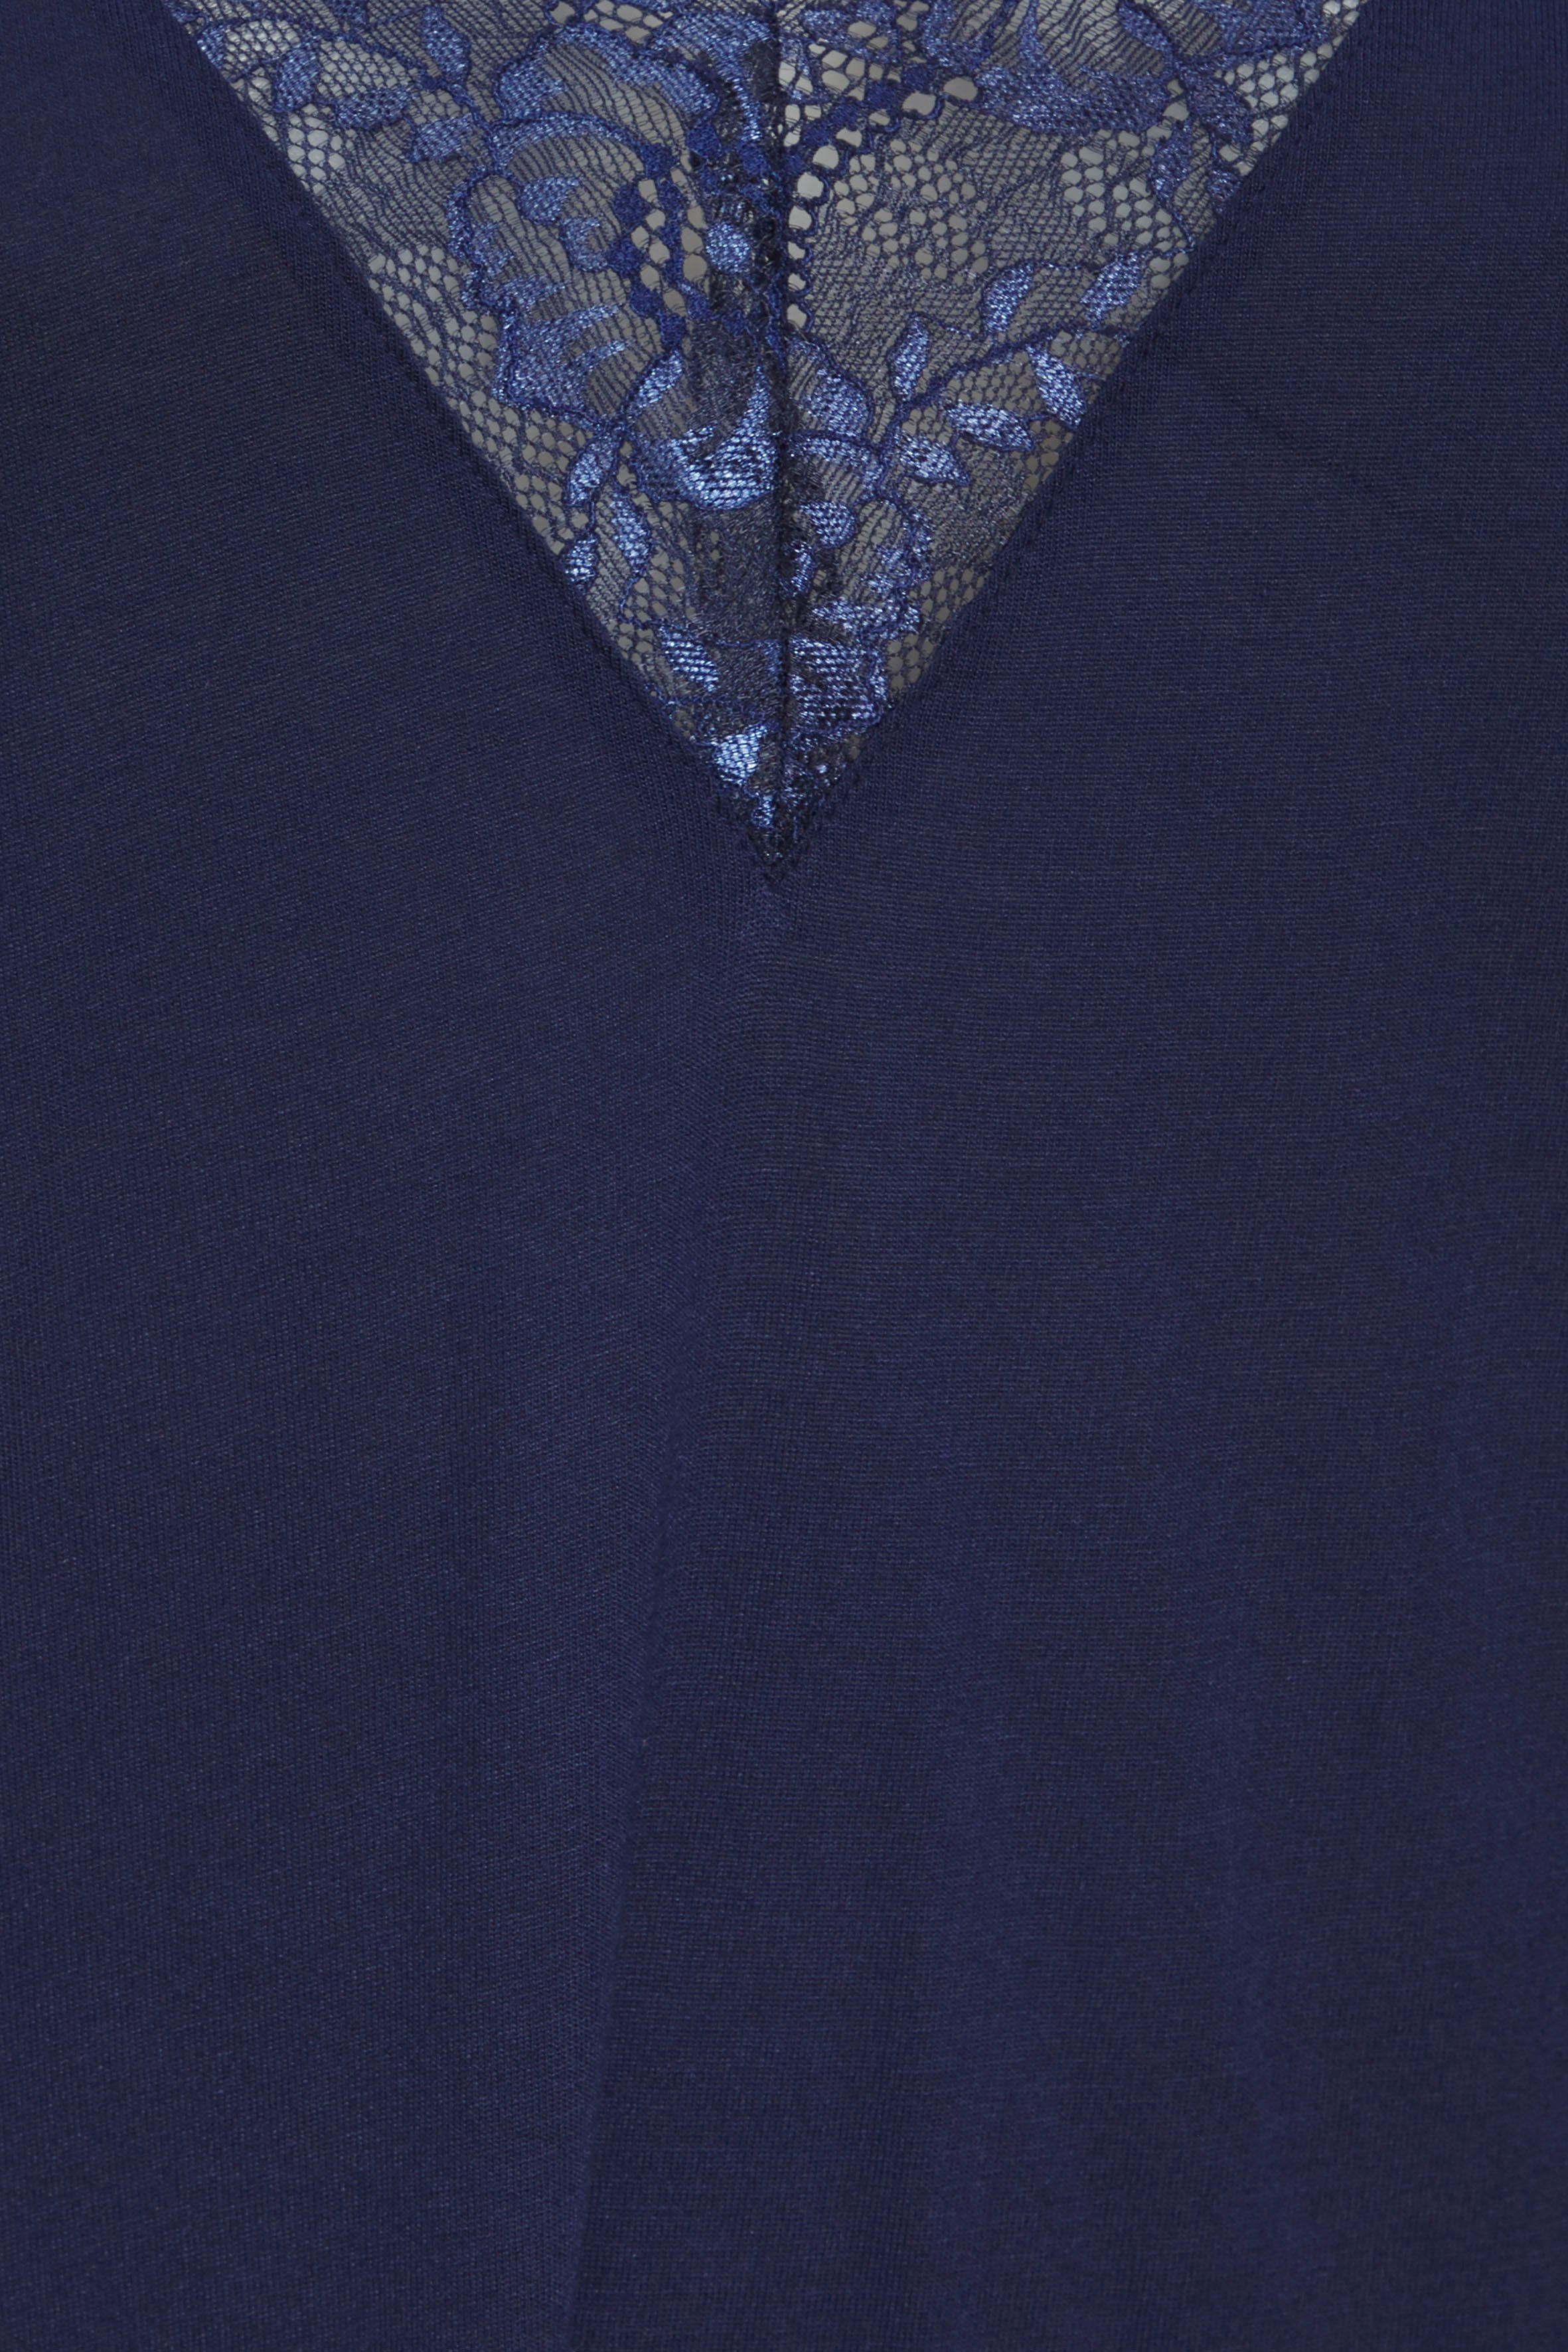 LASCANA Pyjama (2 tlg., 1 nachtblau Stück) Spitzendetails mit